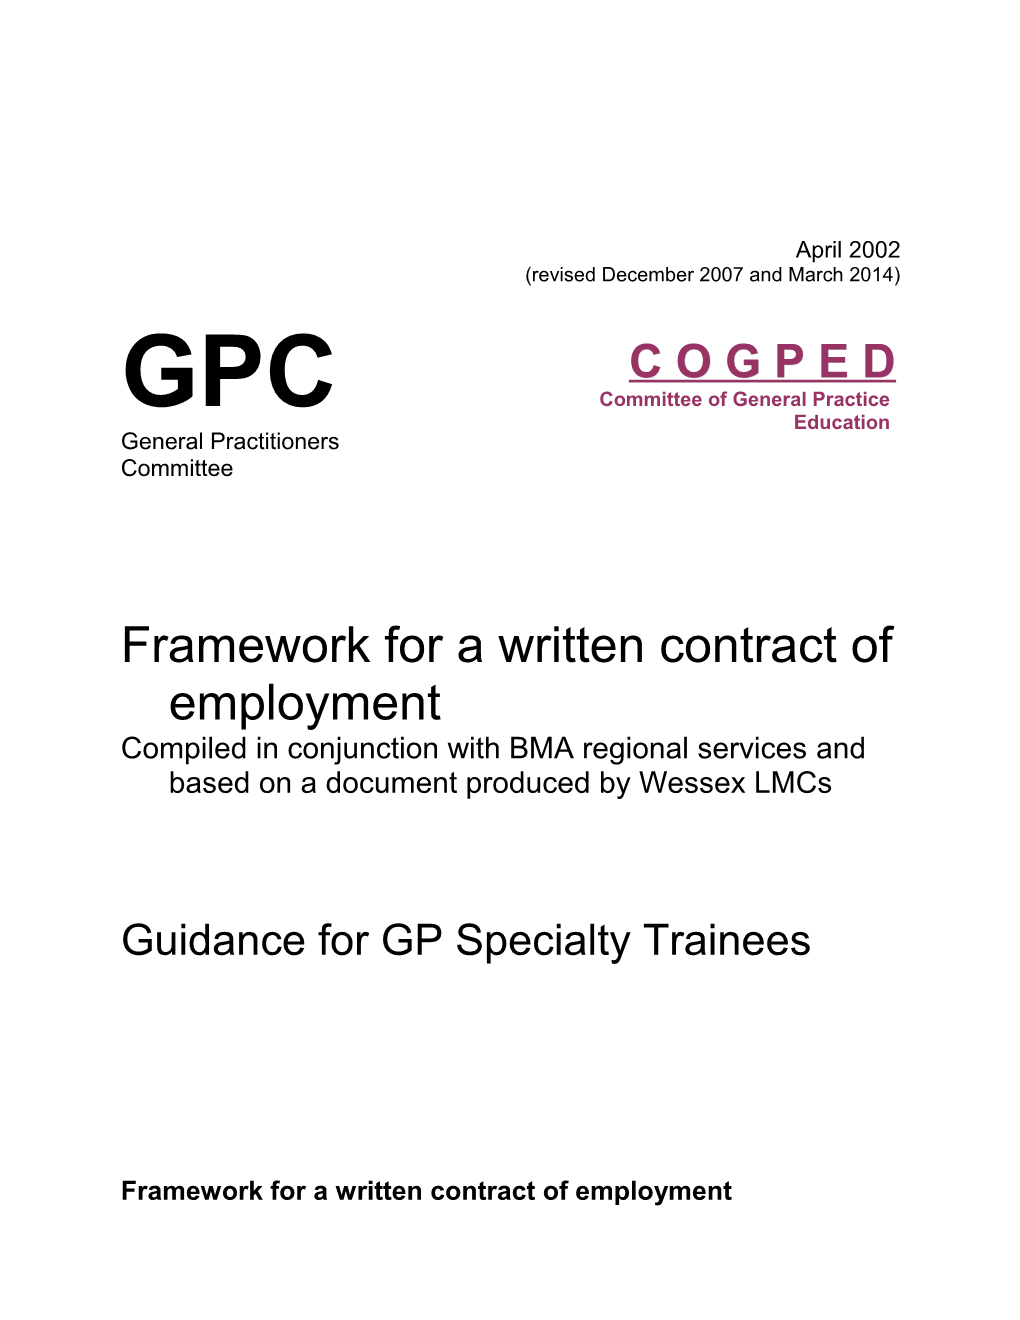 Framework for a Written Contract of Employment